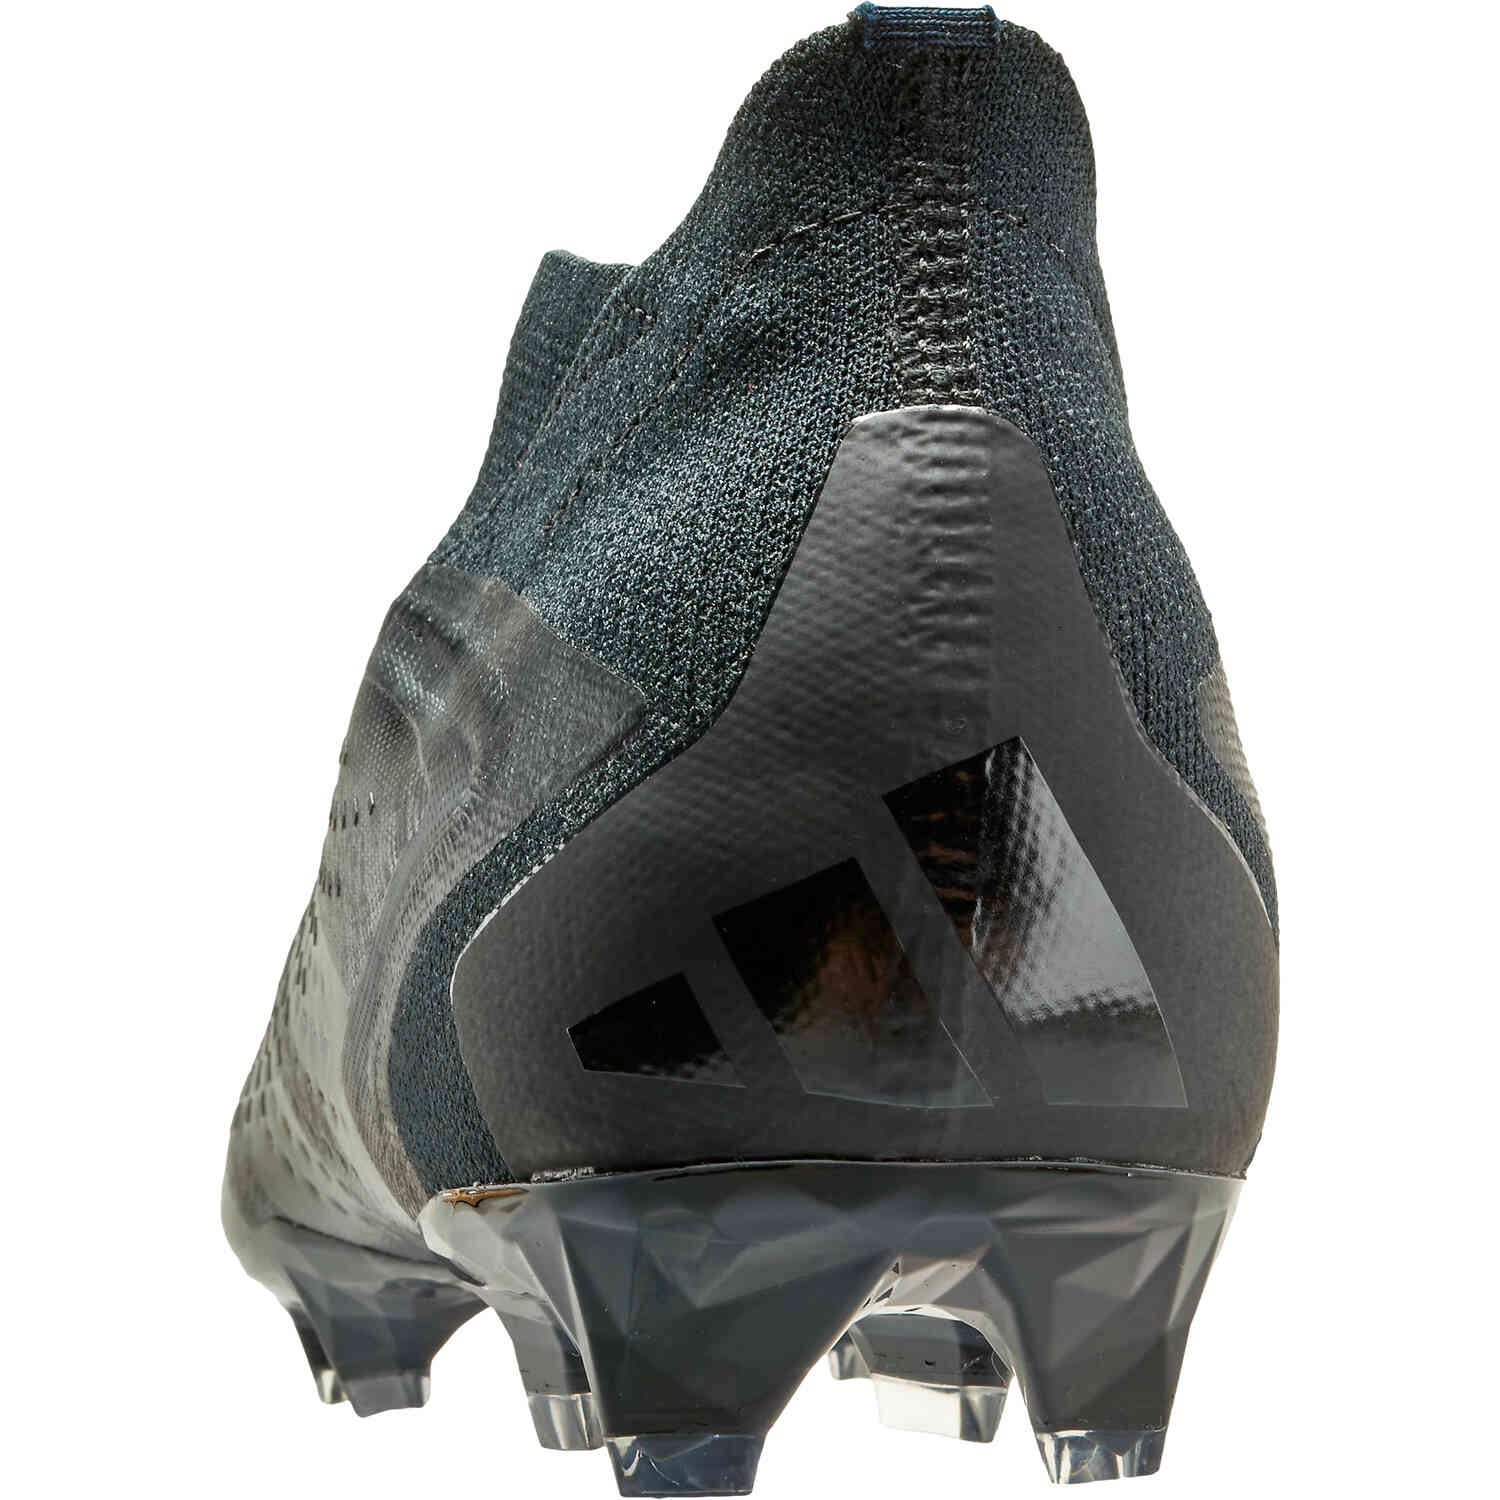 Adidas Predator 18+ FG Soccer Cleats All Black – kicksnatics